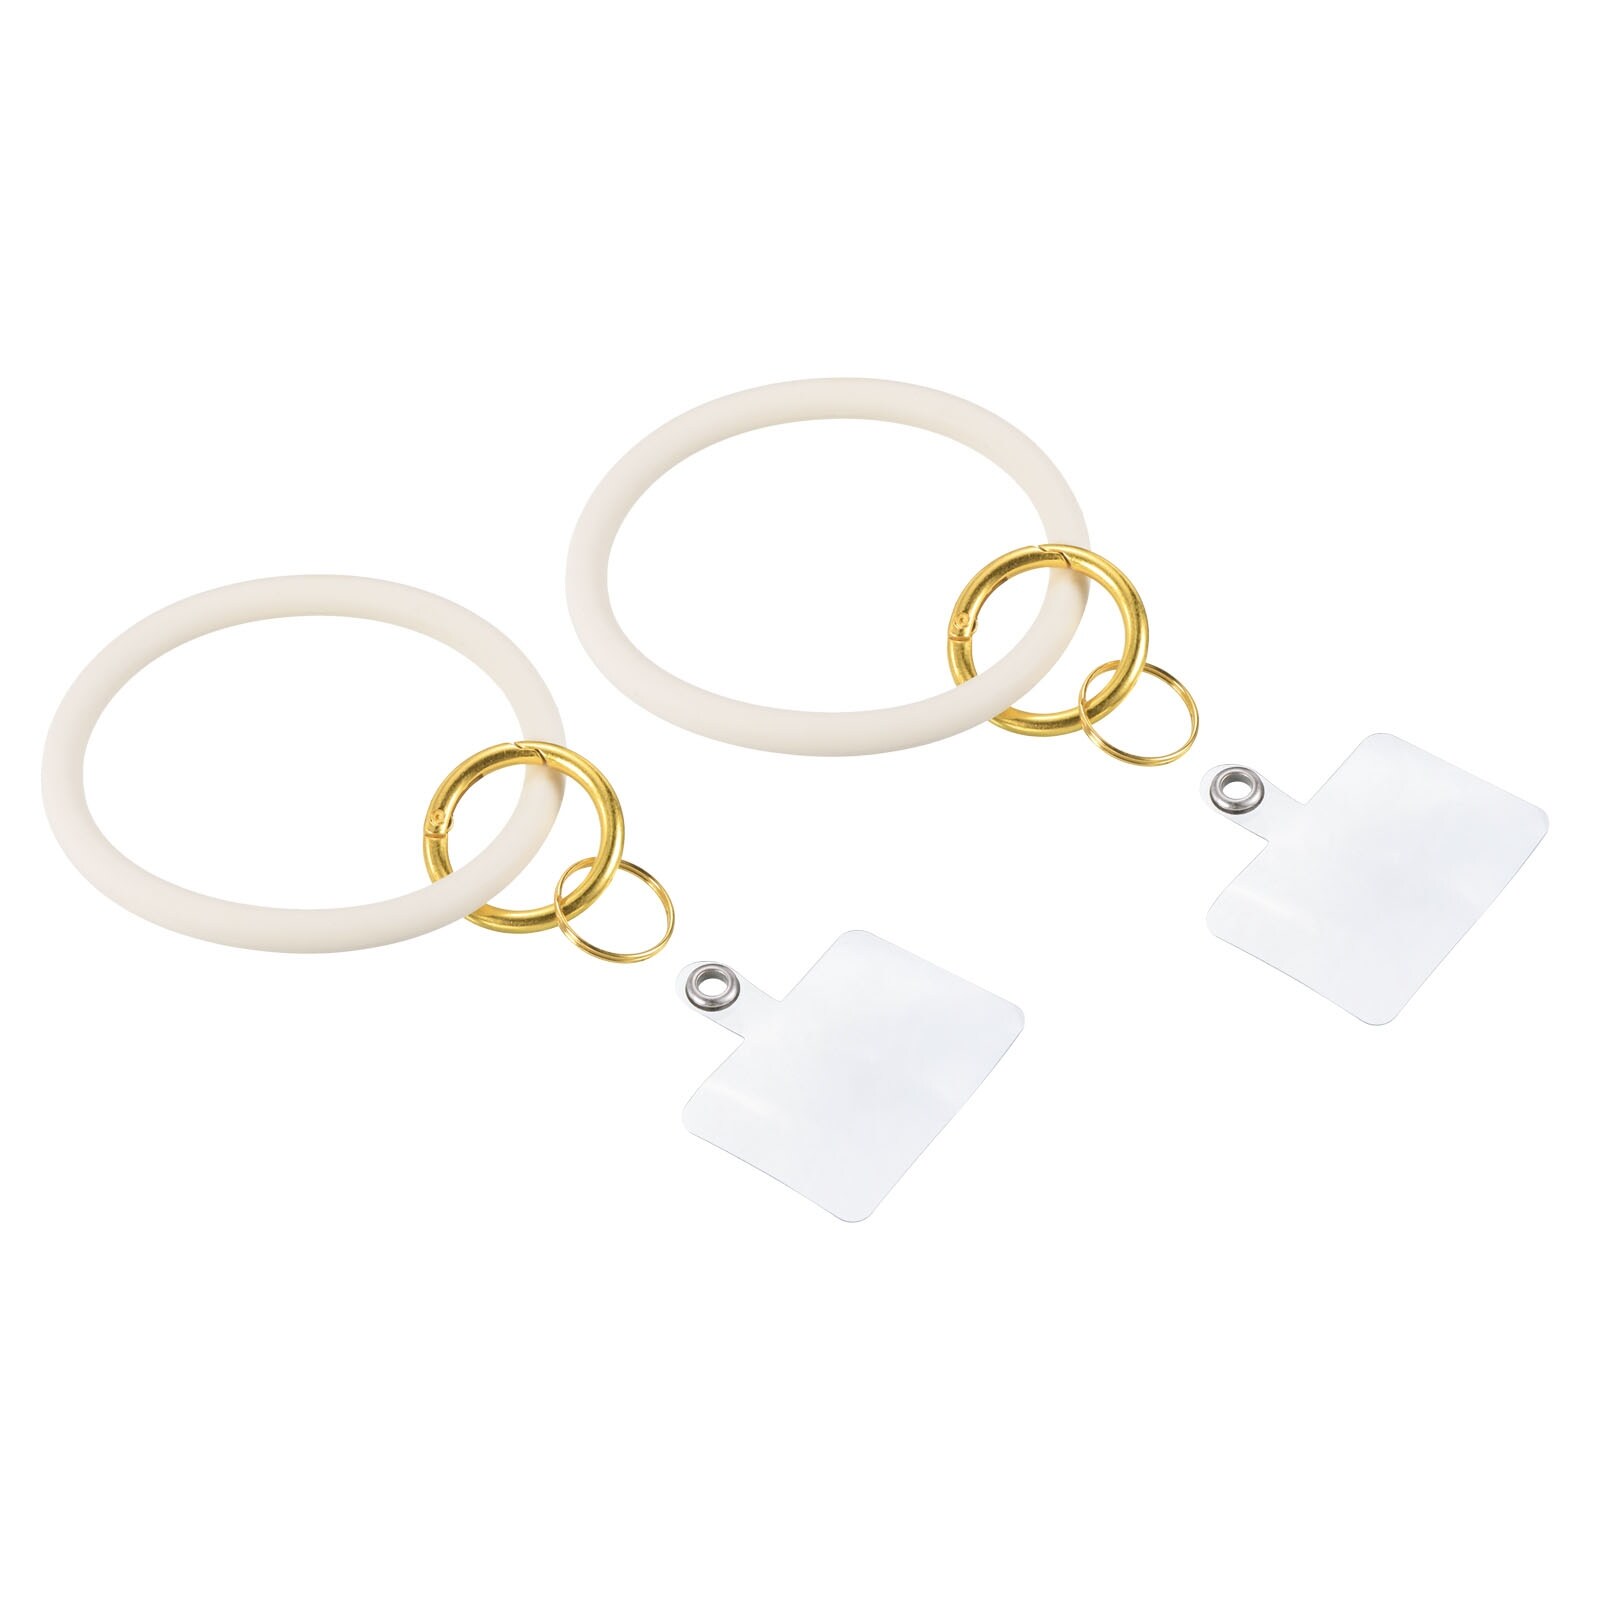 Key Ring Bracelet Silicone Keychain Circle Wristlet Keyrings - Creamy White  - 2.75 - Bed Bath & Beyond - 36859982